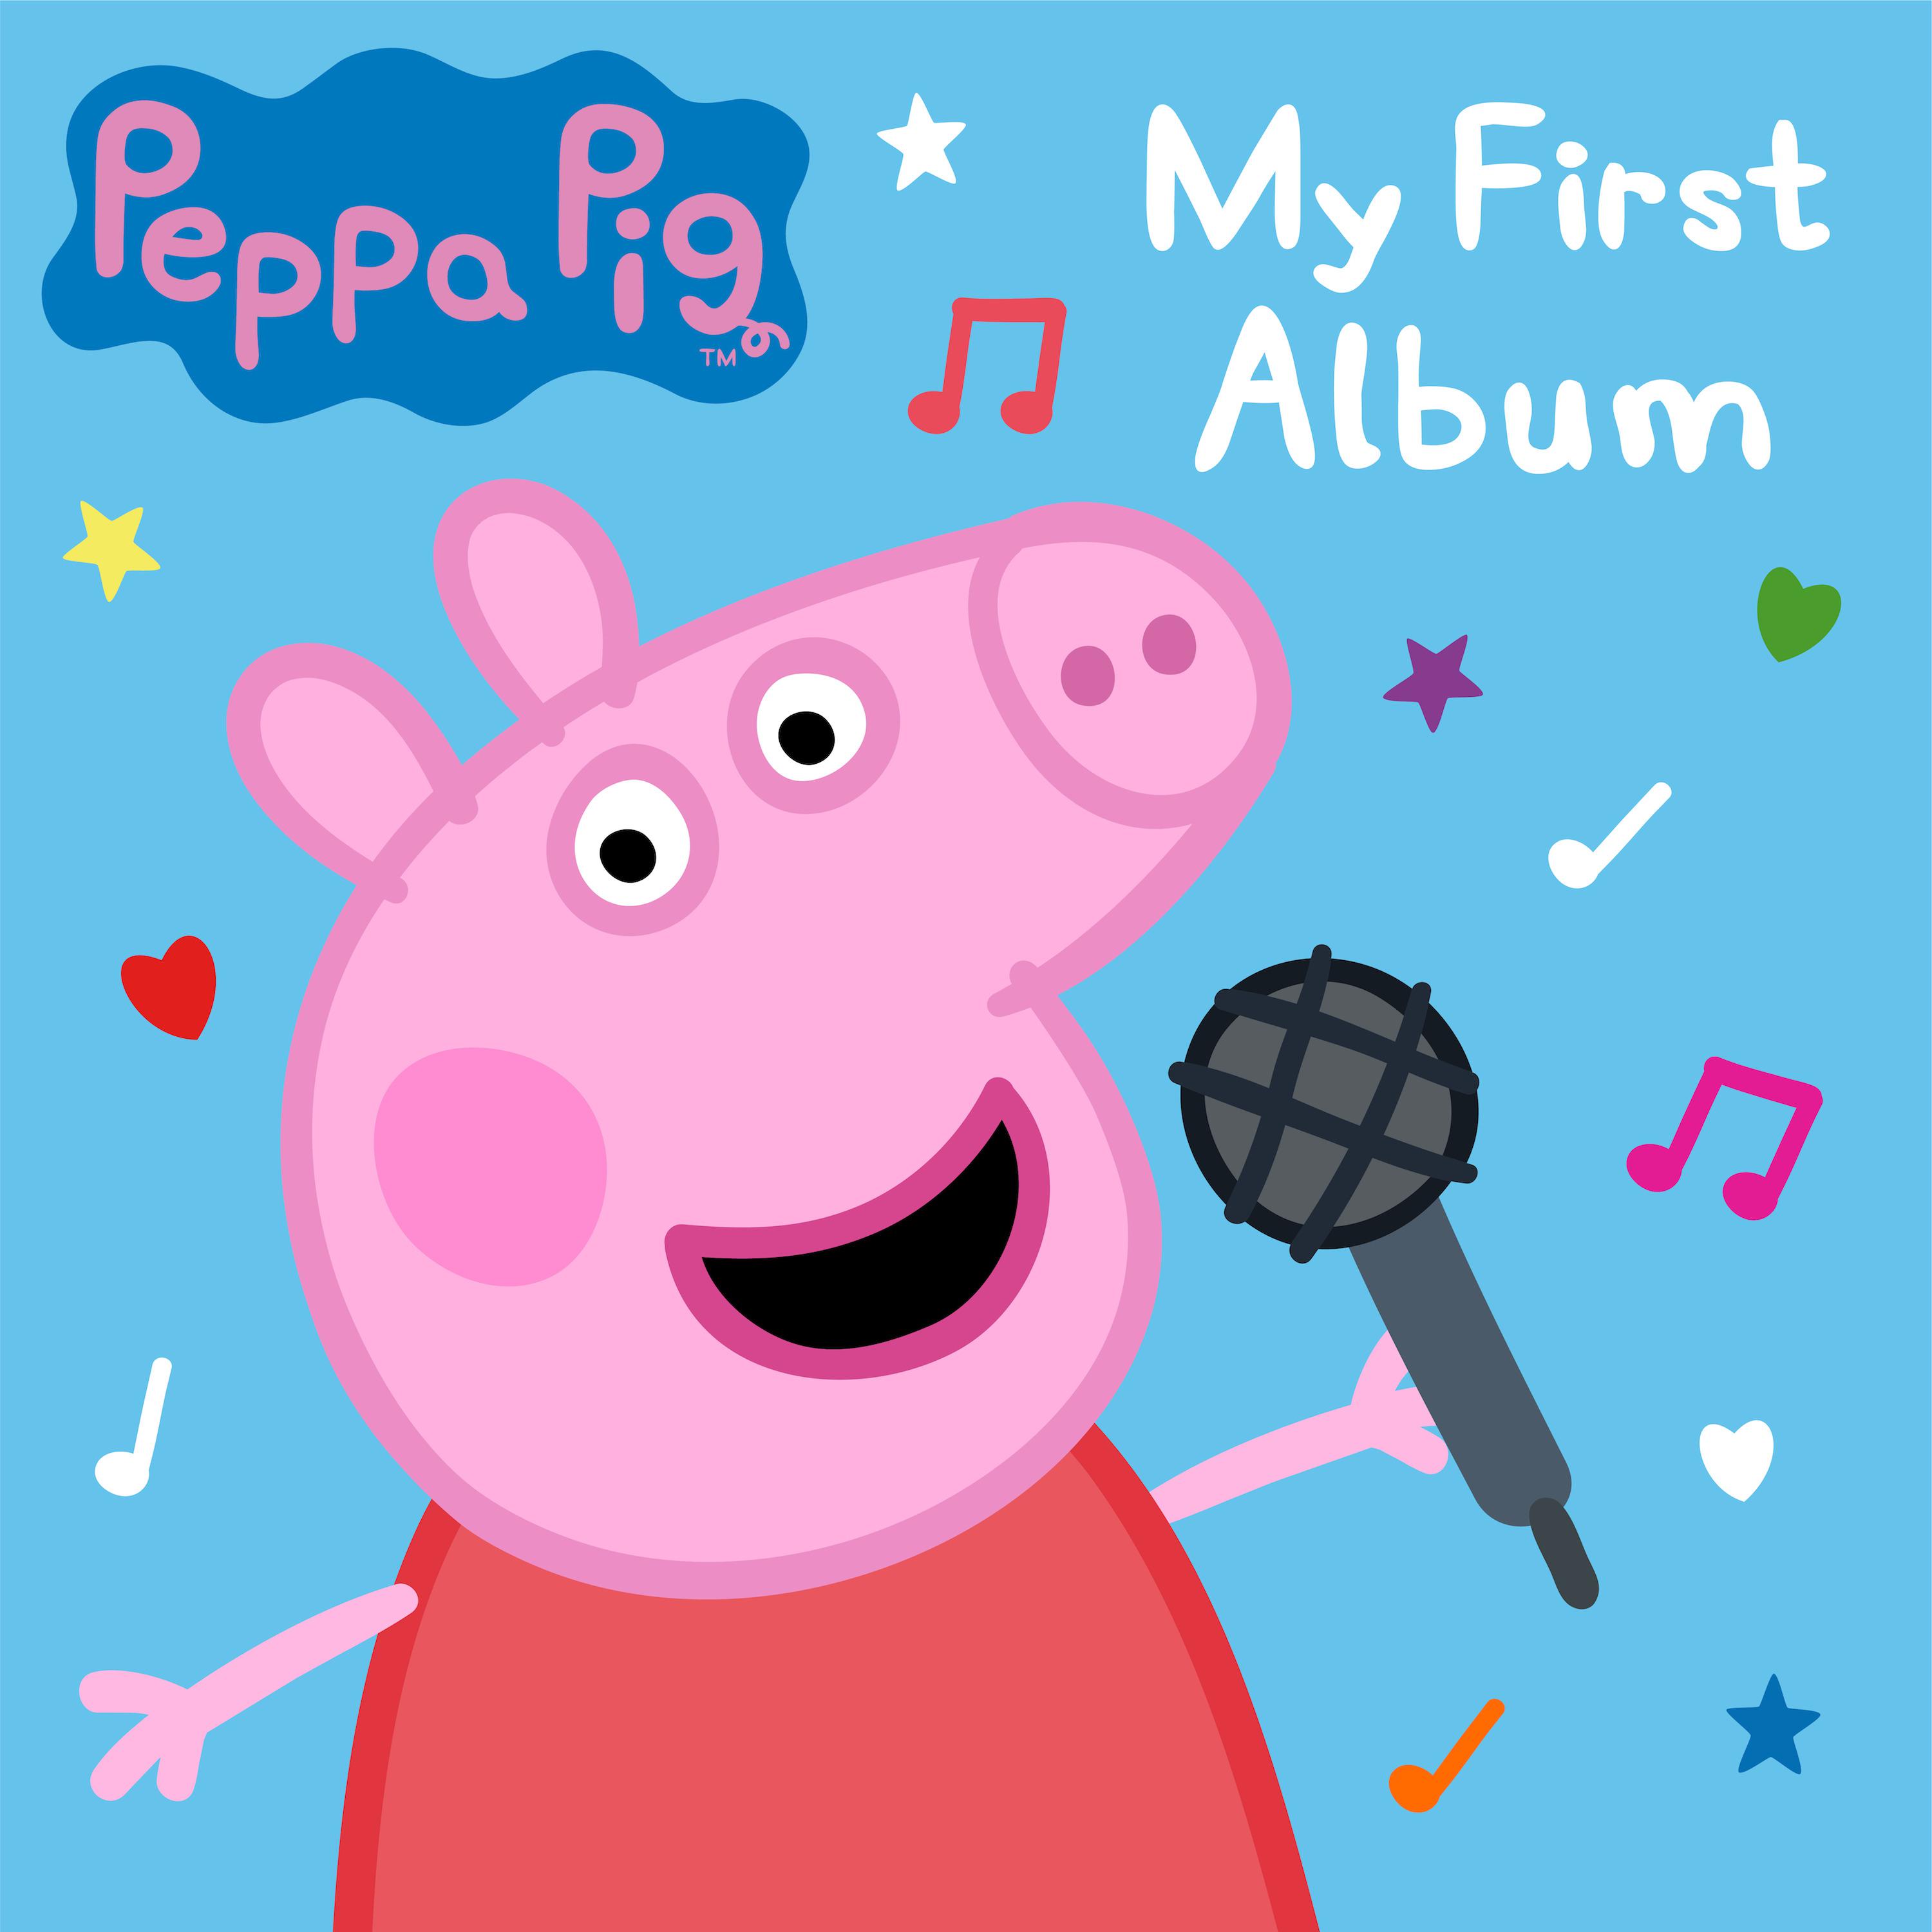 It's Peppa Pig